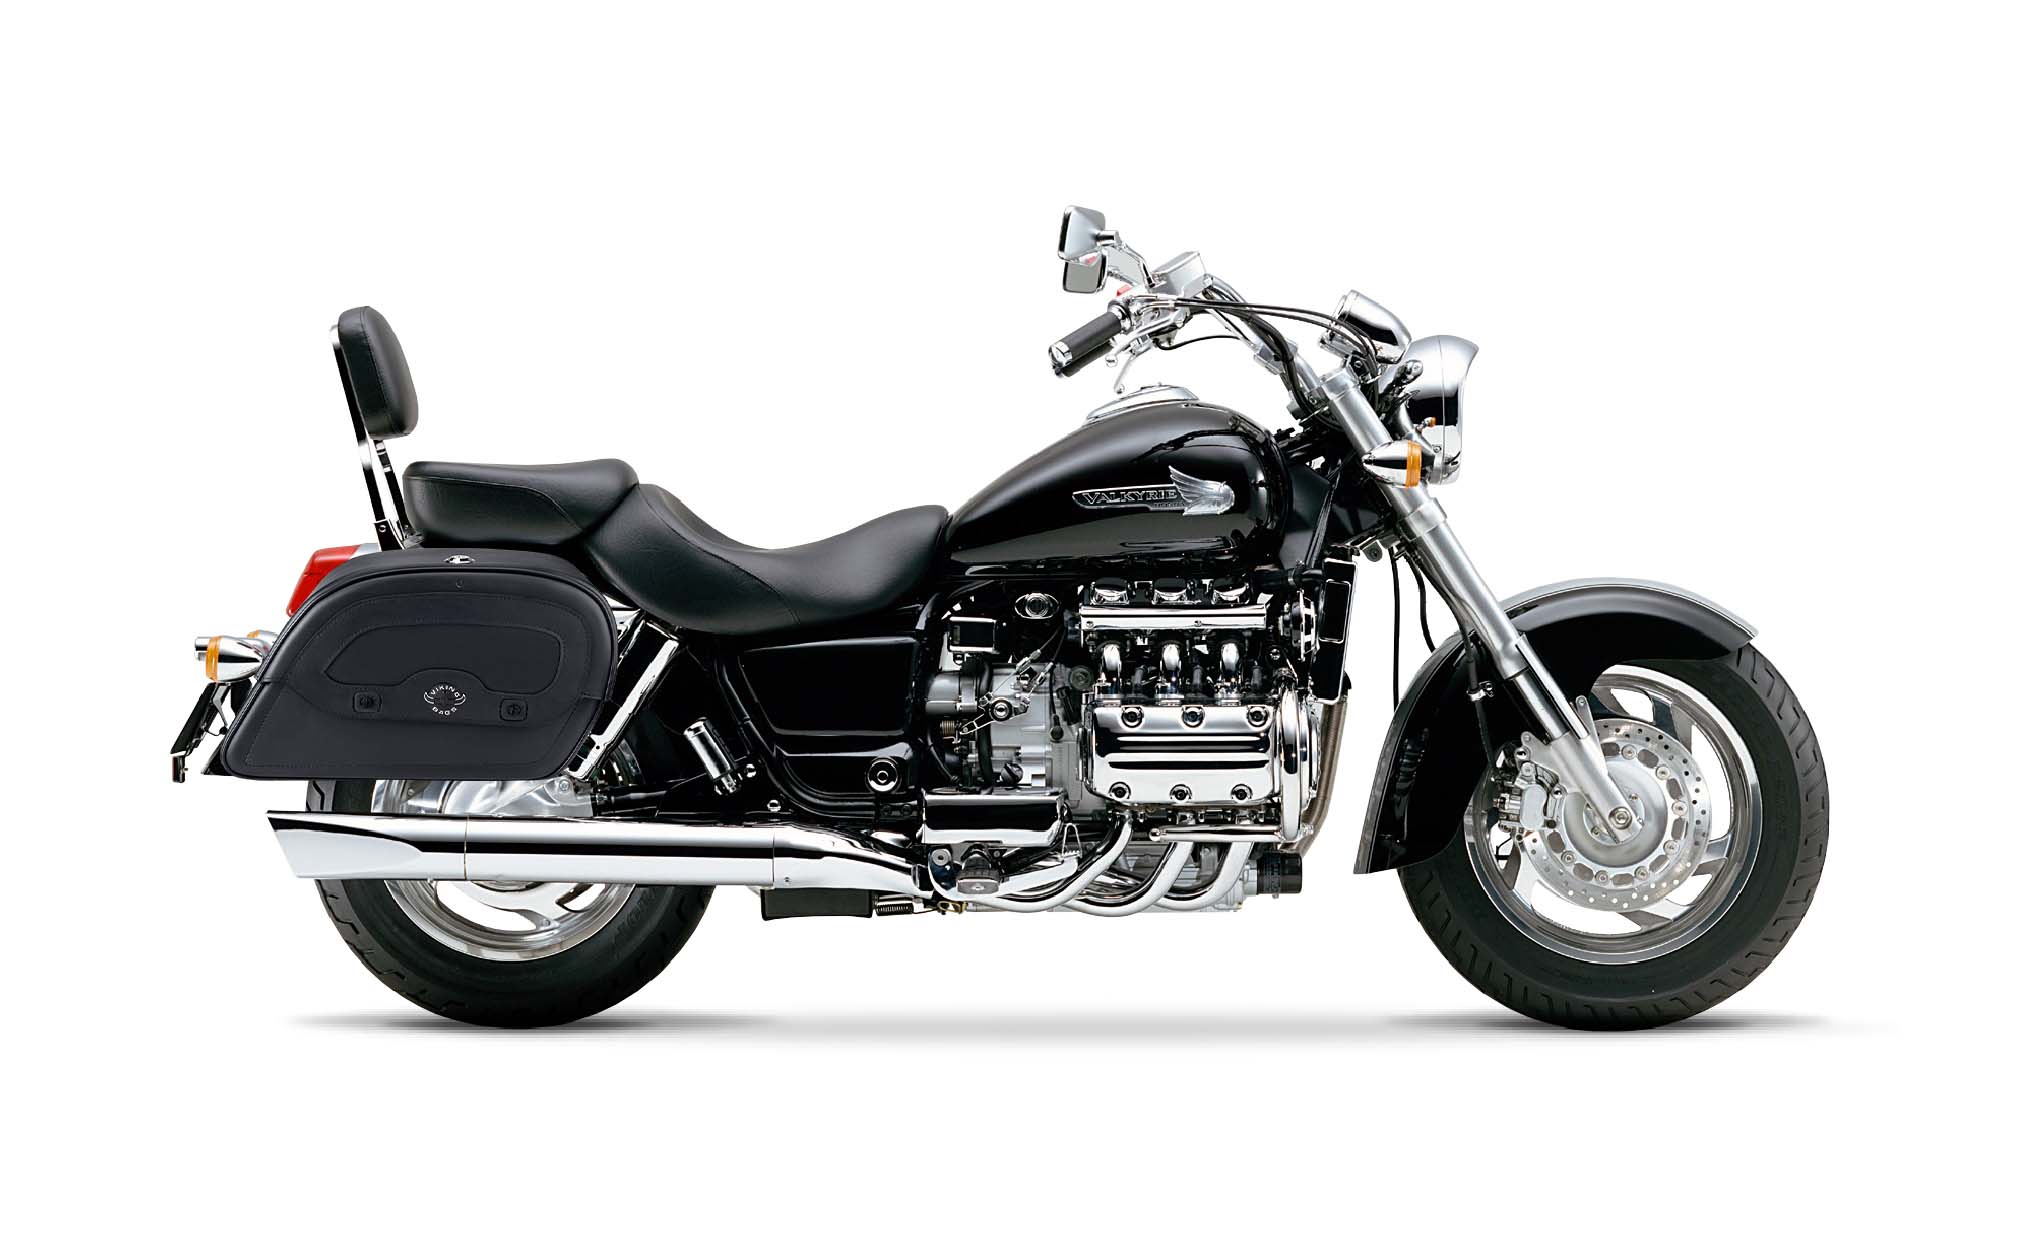 Viking Warrior Large Honda Valkyrie Standard Shock Cut Out Leather Motorcycle Saddlebags on Bike Photo @expand